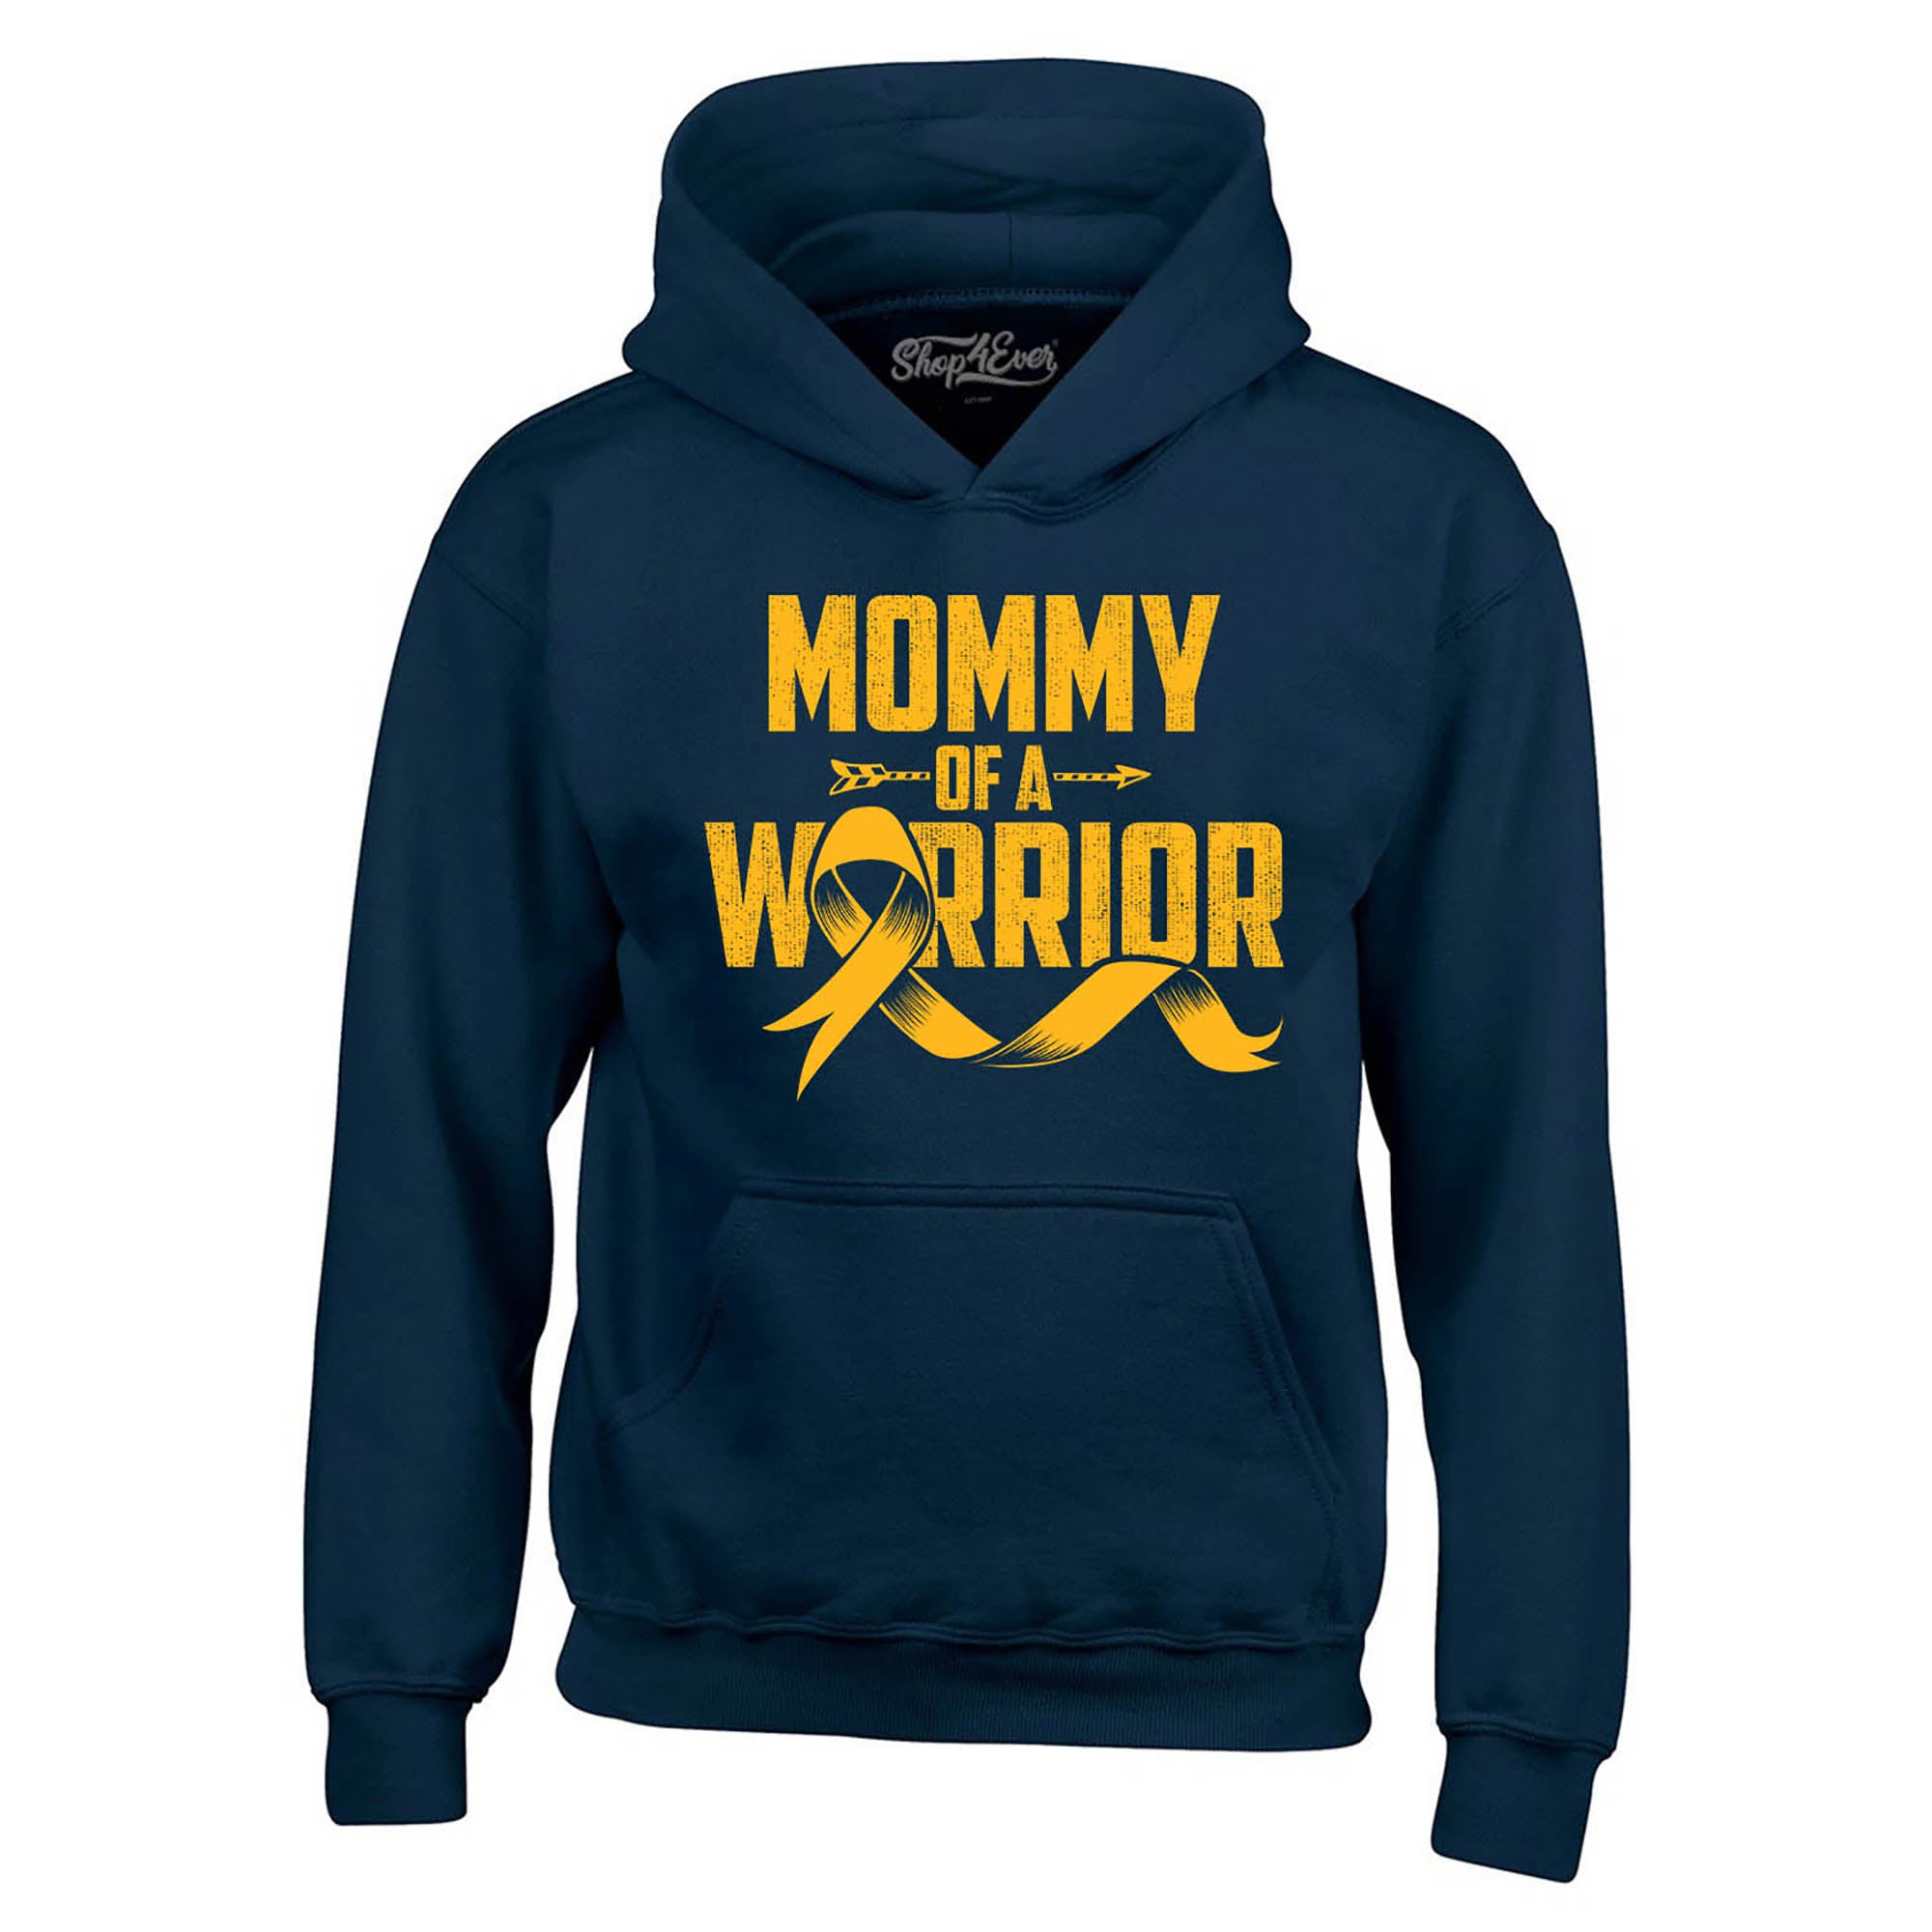 Mommy of a Warrior Childhood Cancer Awareness Hoodie Sweatshirts